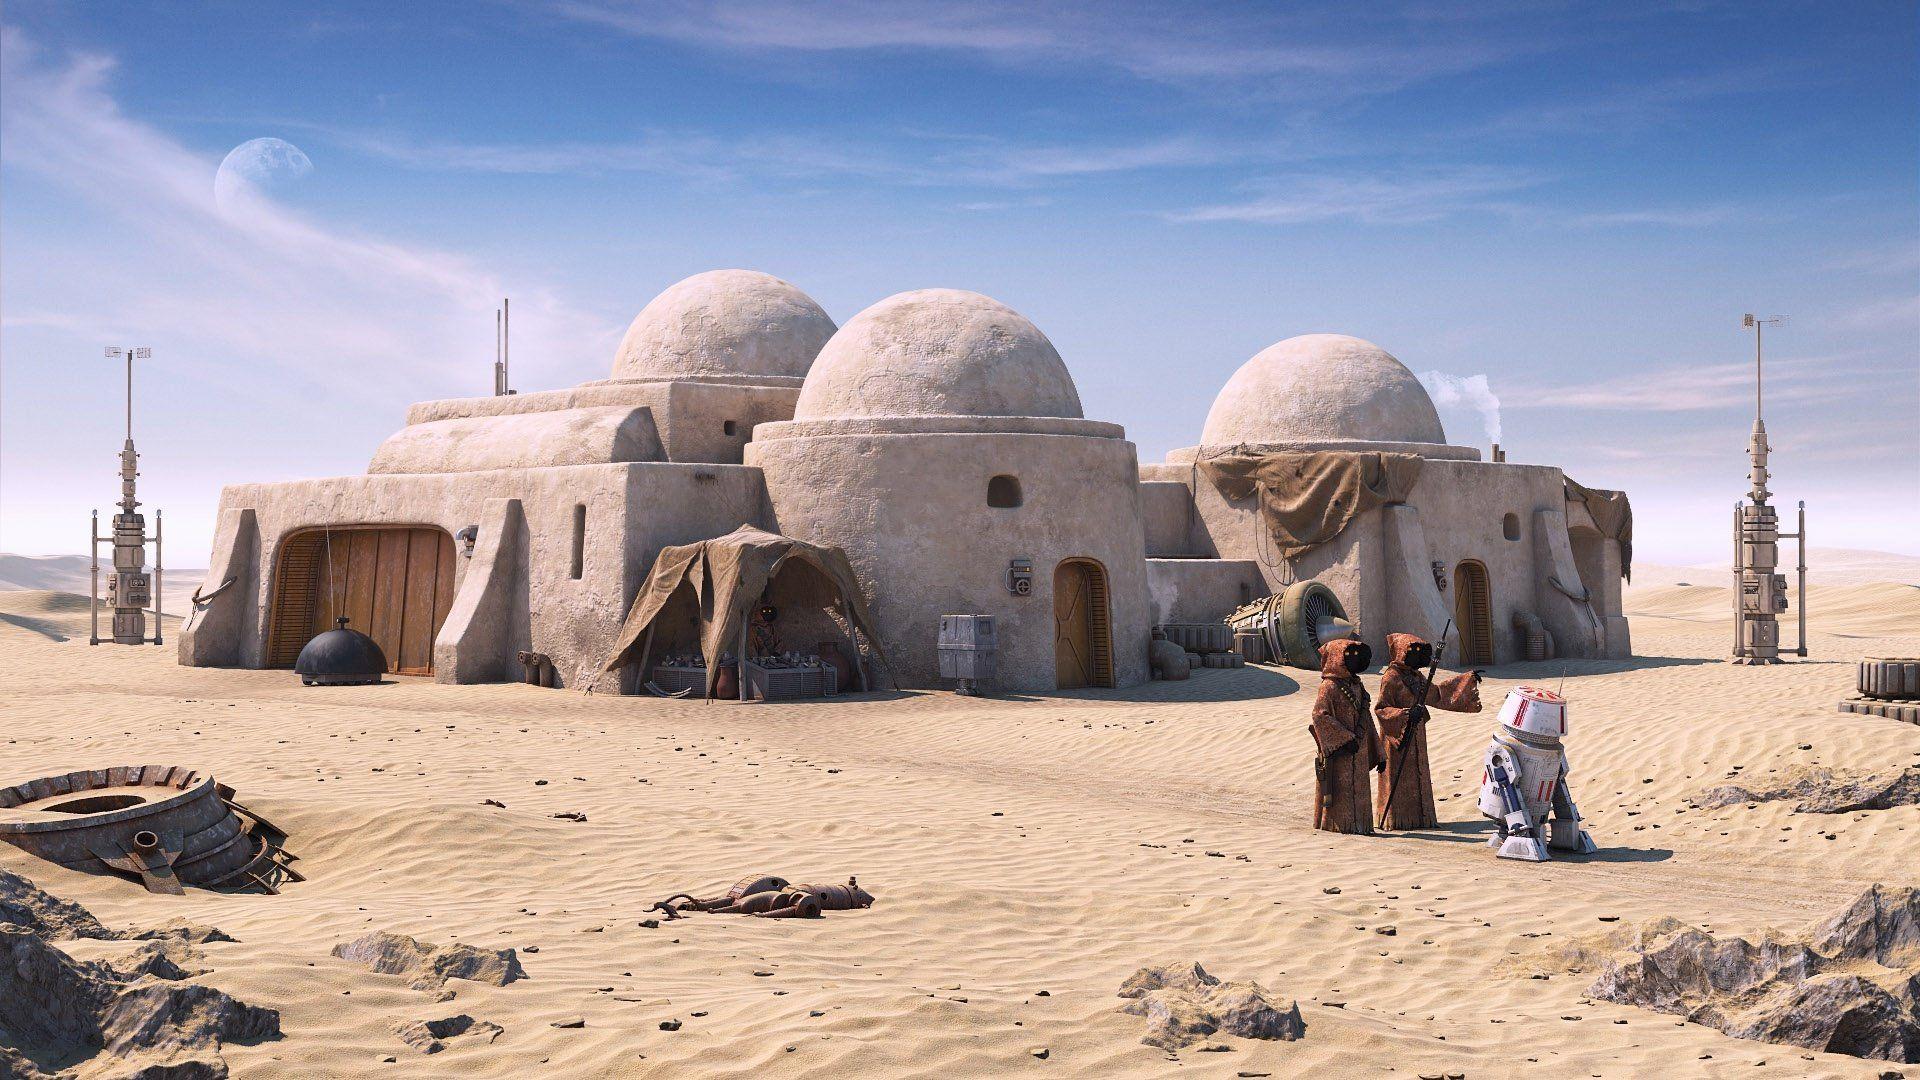 star wars tatooine scenery